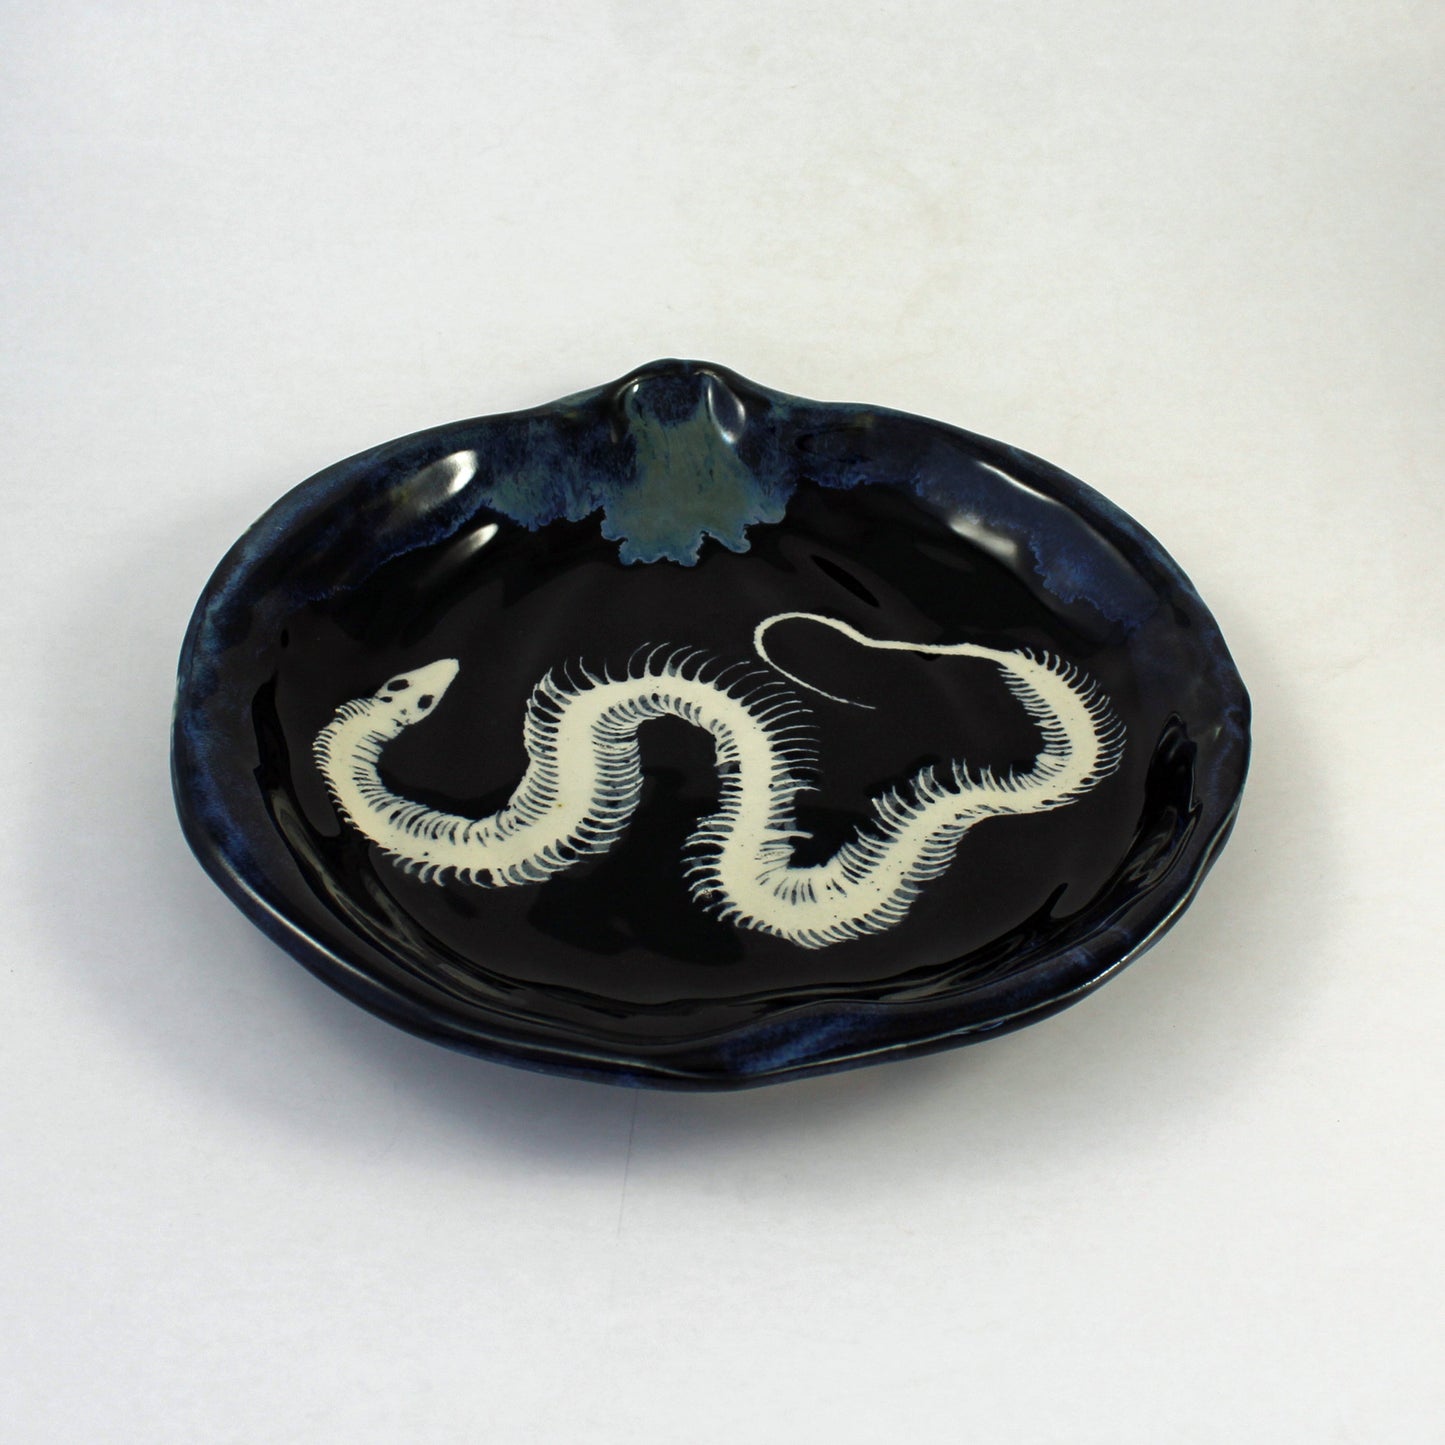 Snake Skeleton on Black Pumpkin Ceramic Plate